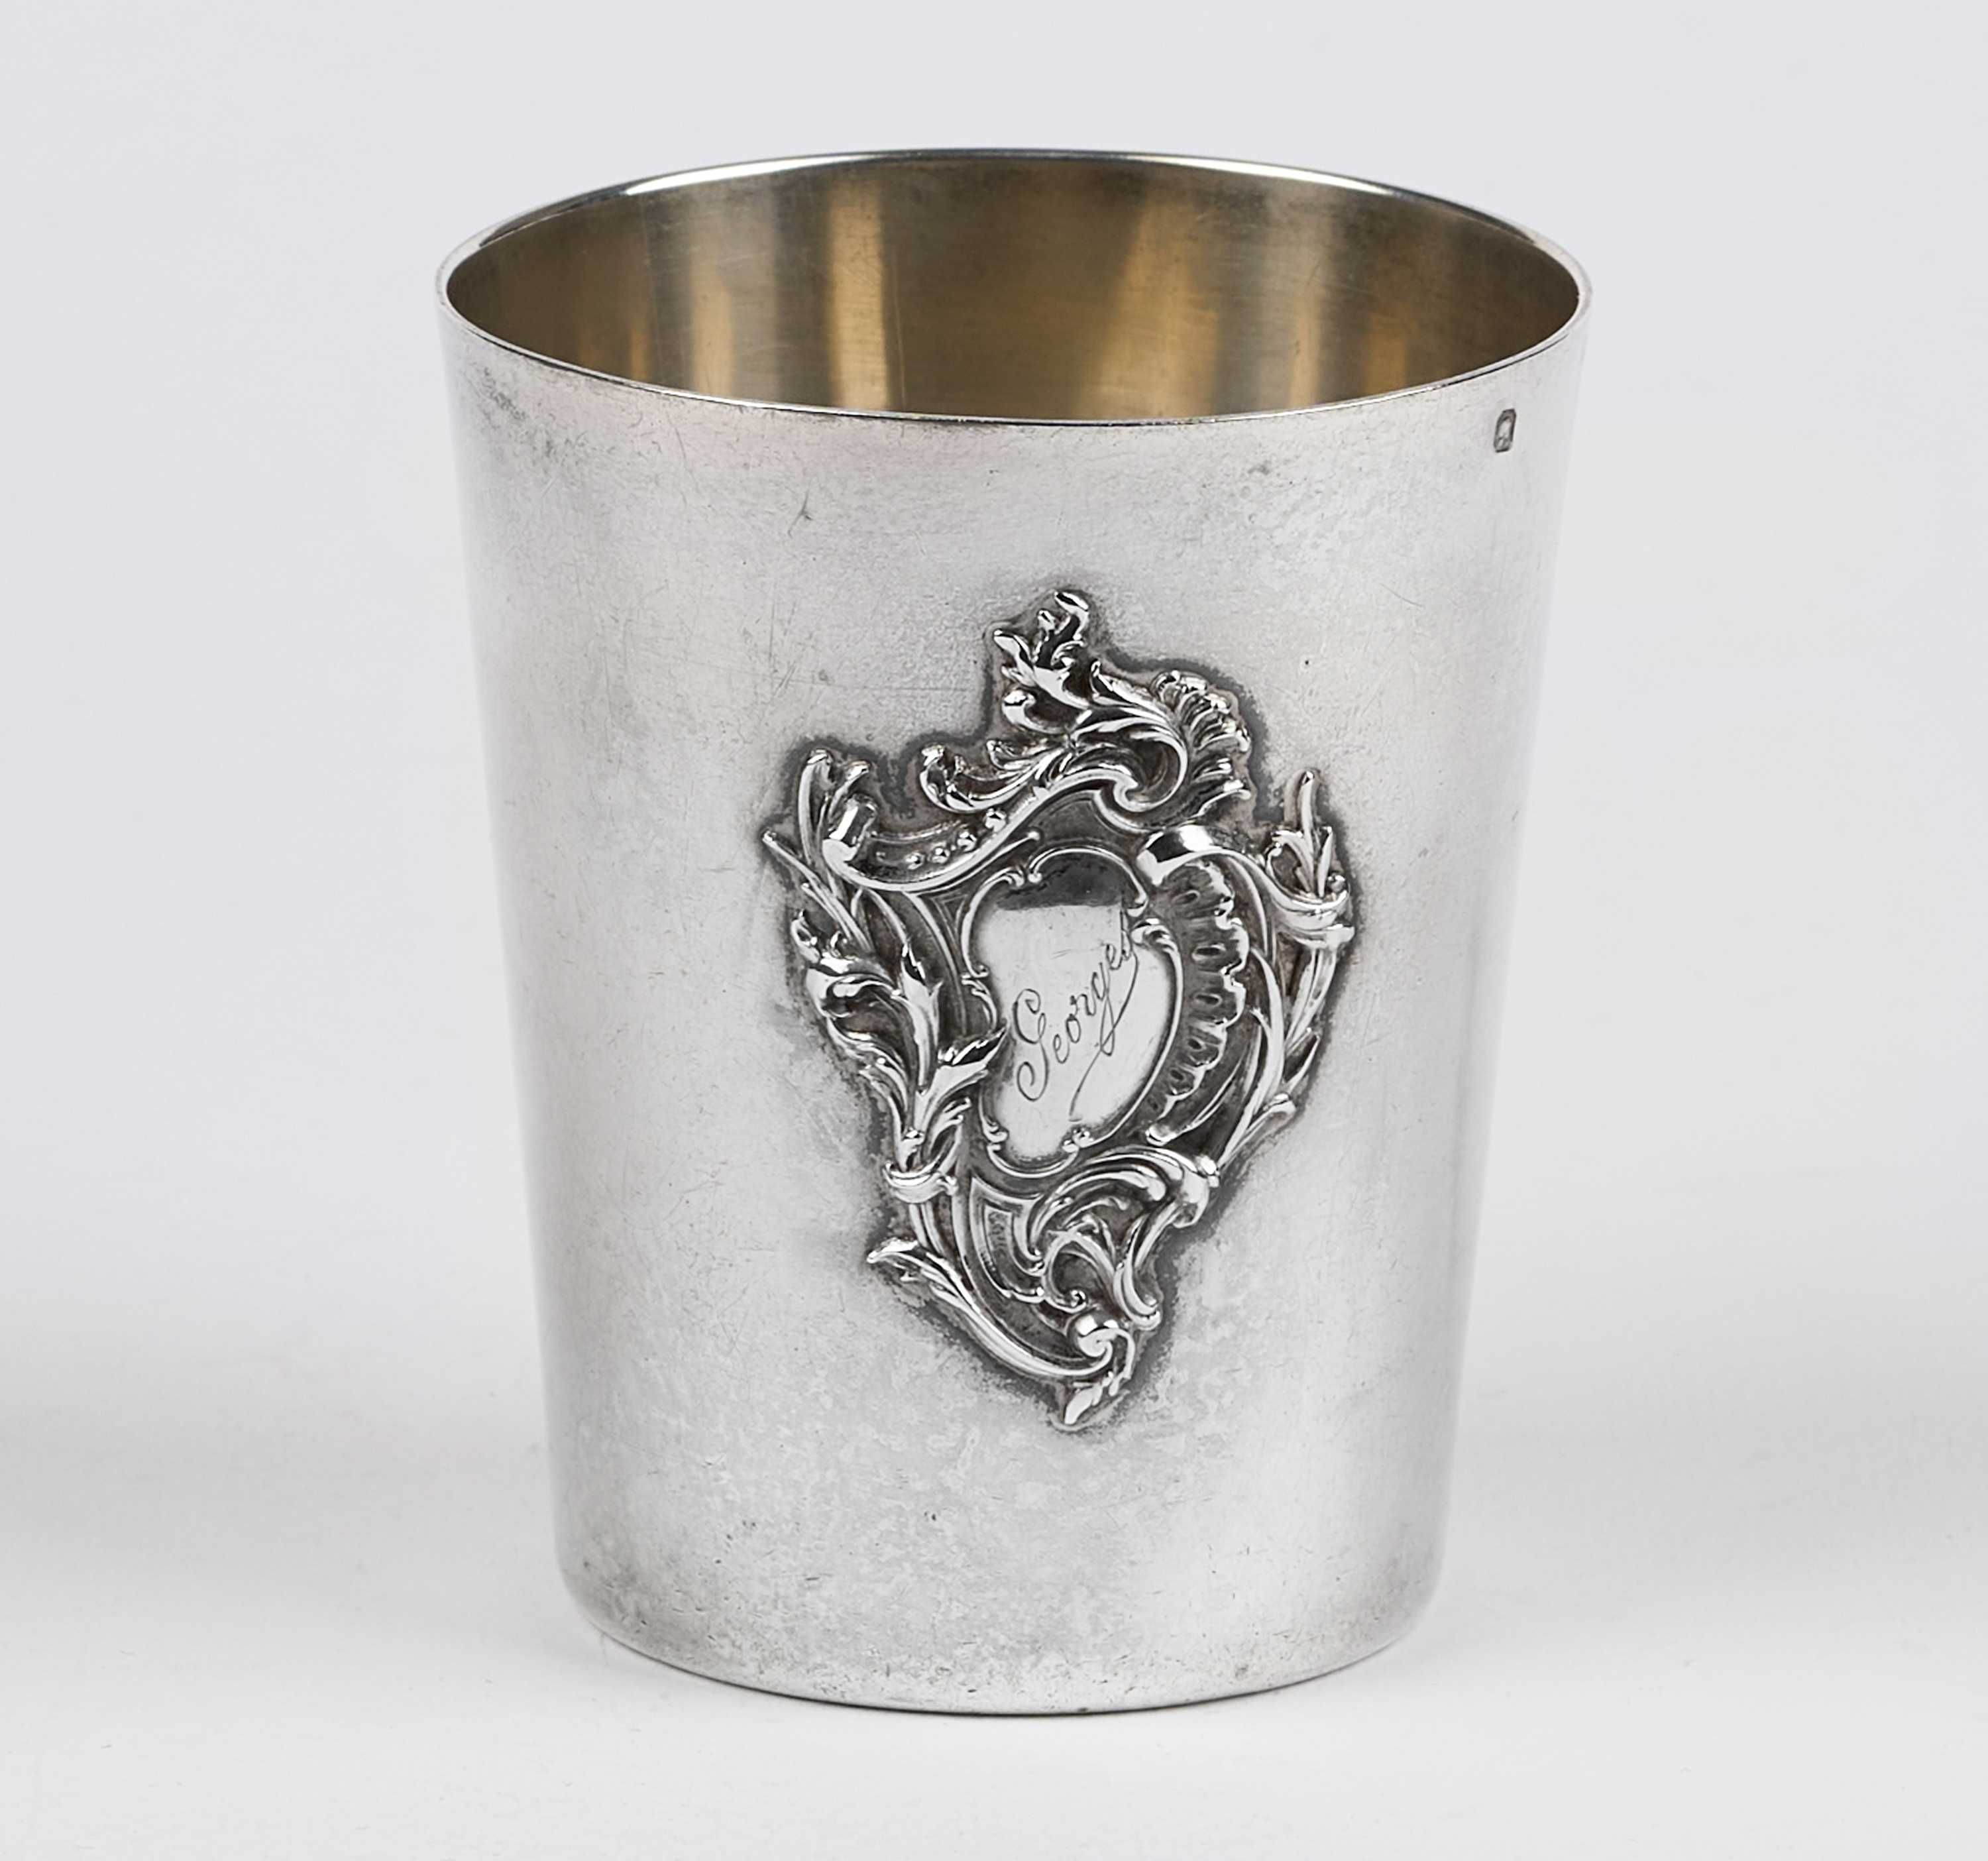 Pahar mare de argint 950,ranta,emblema nobiliara,210 ml purificare apa